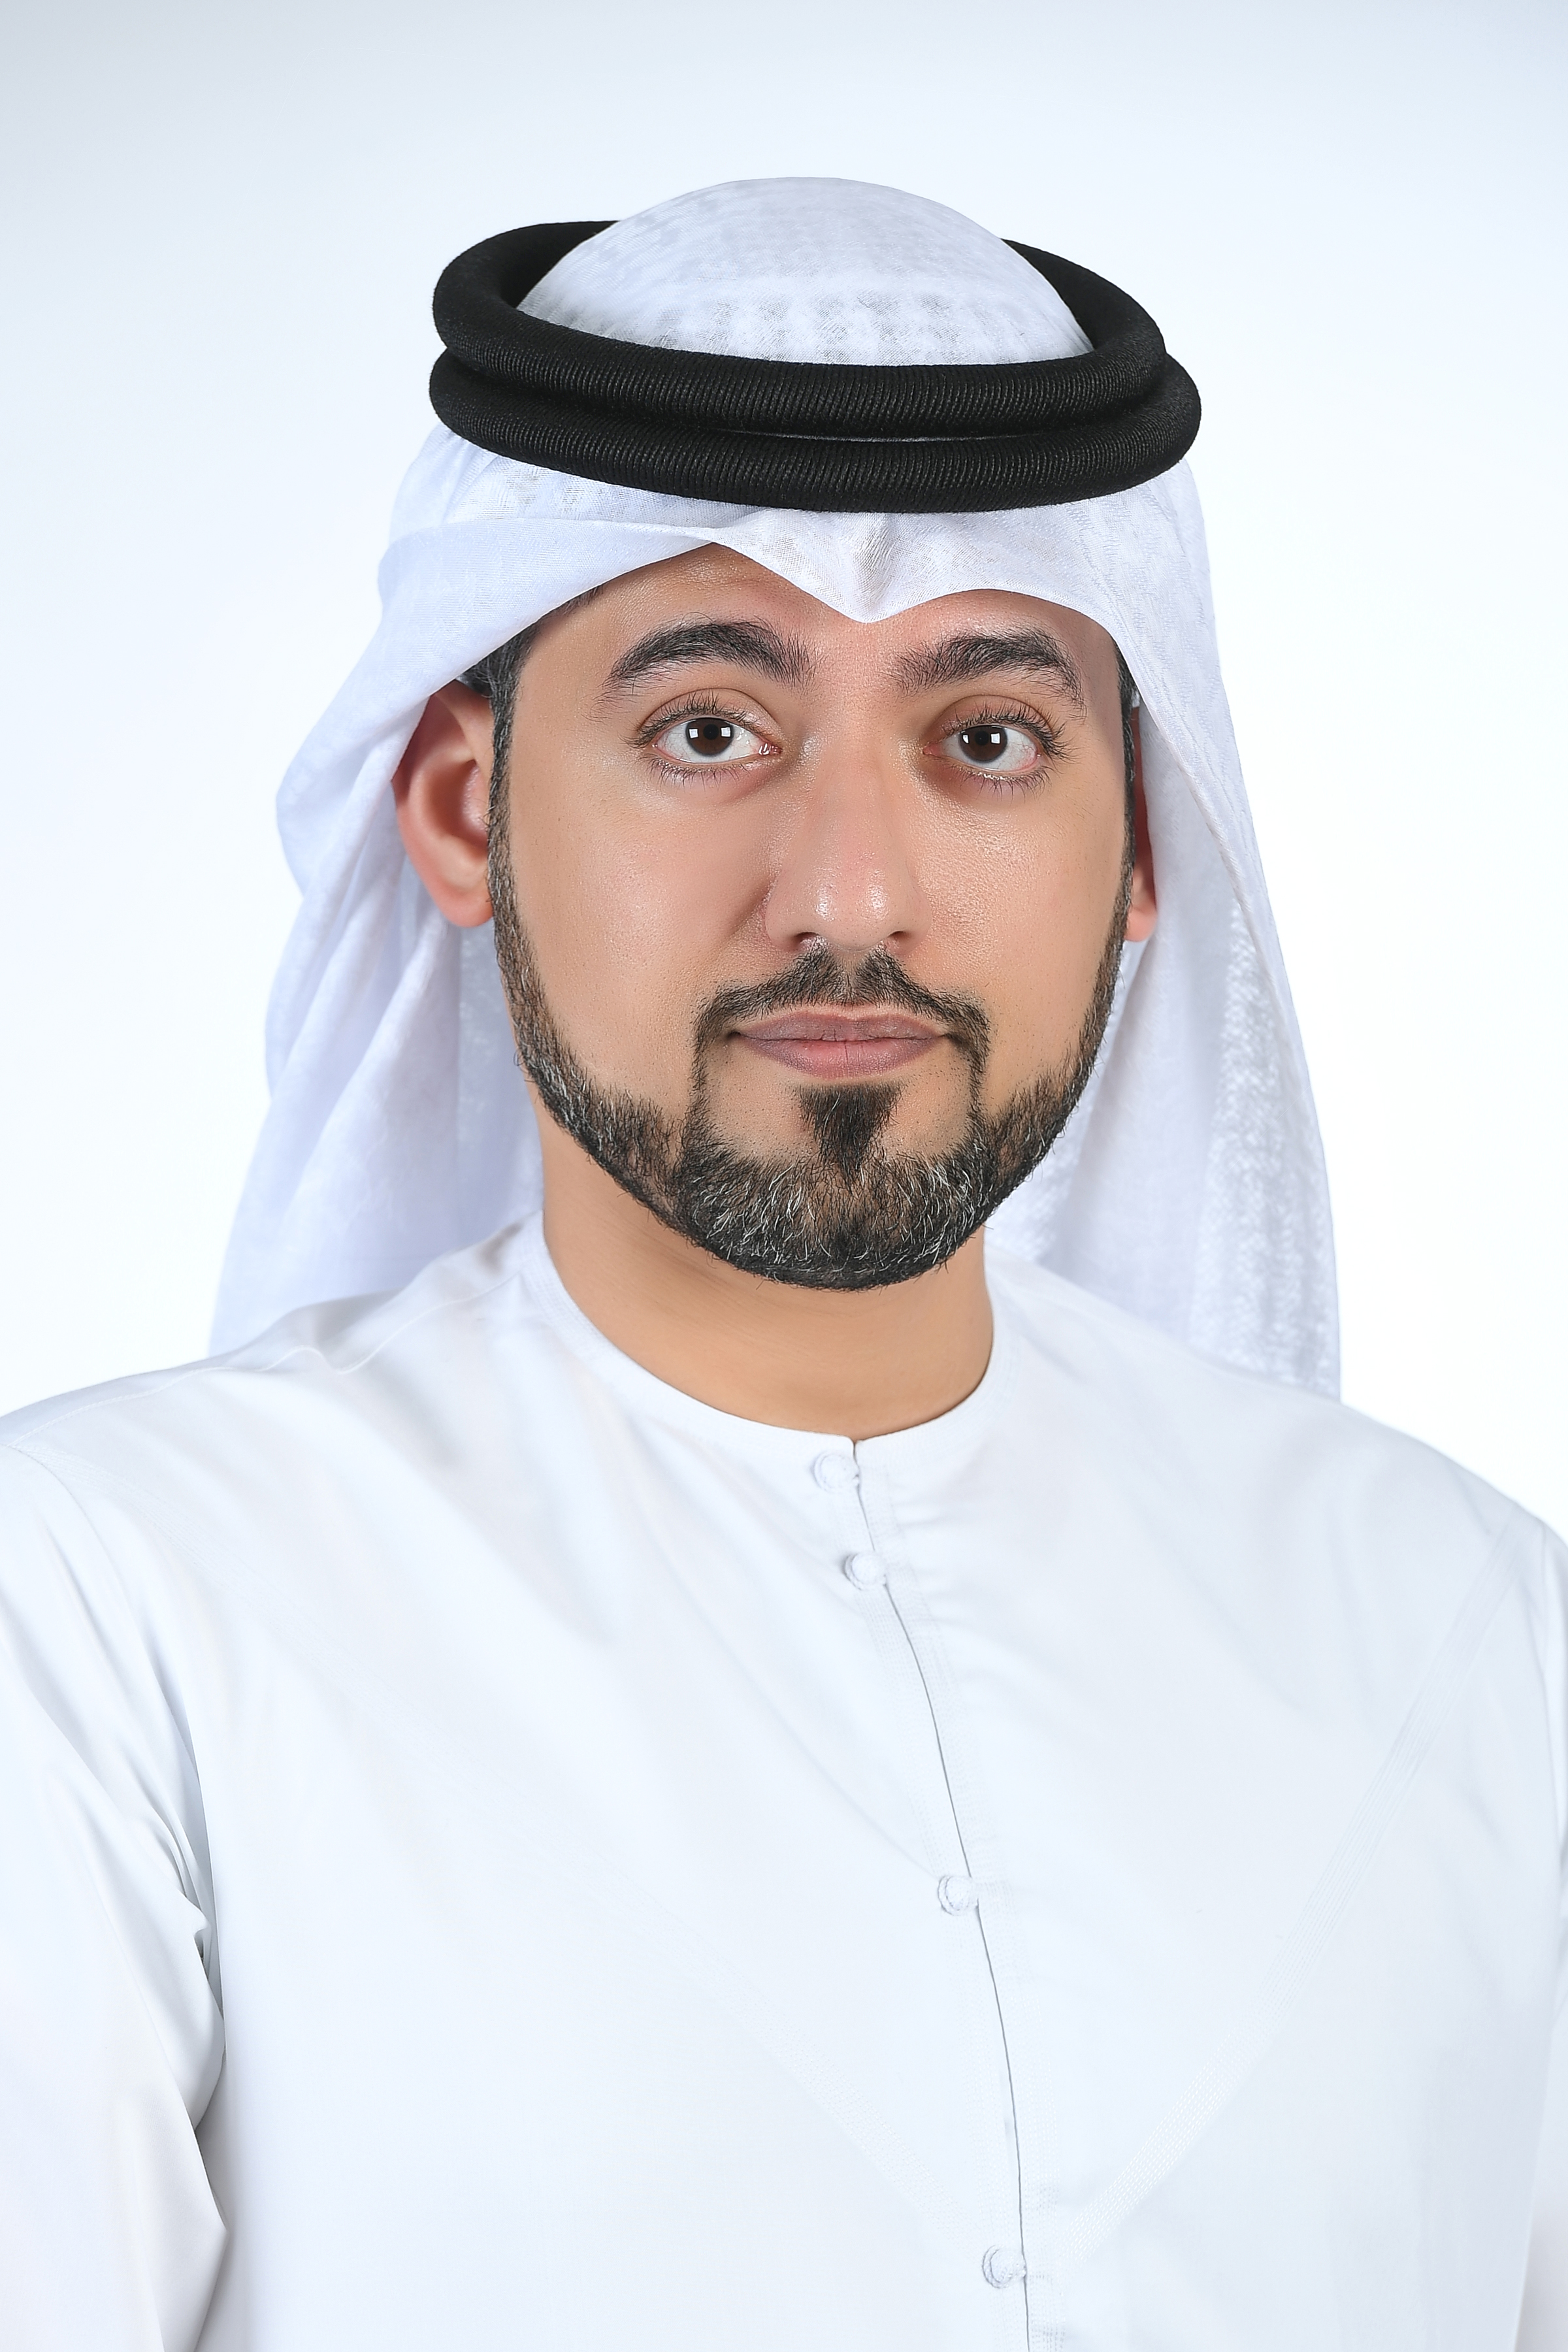 Dr. Ahmed Rashed Kulaib Al Tunaiji